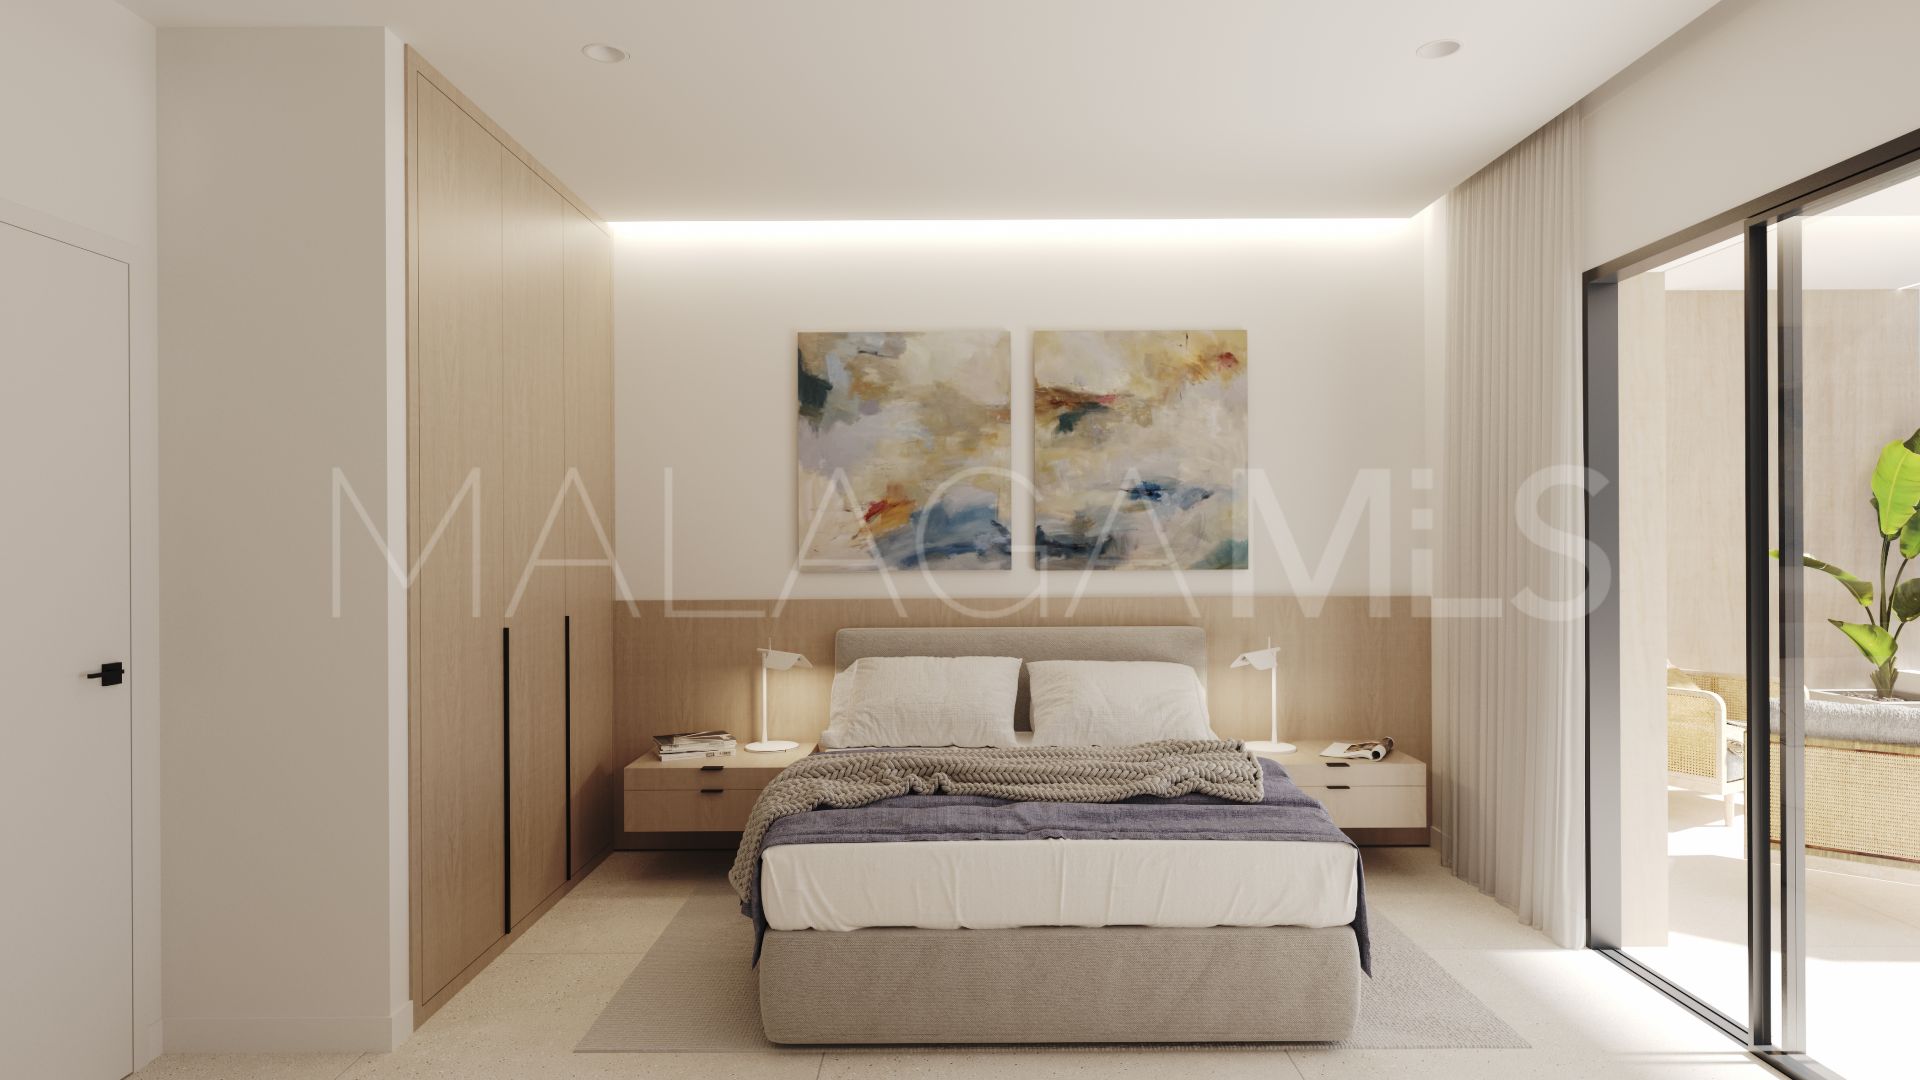 2 bedrooms apartment in San Pedro de Alcantara for sale